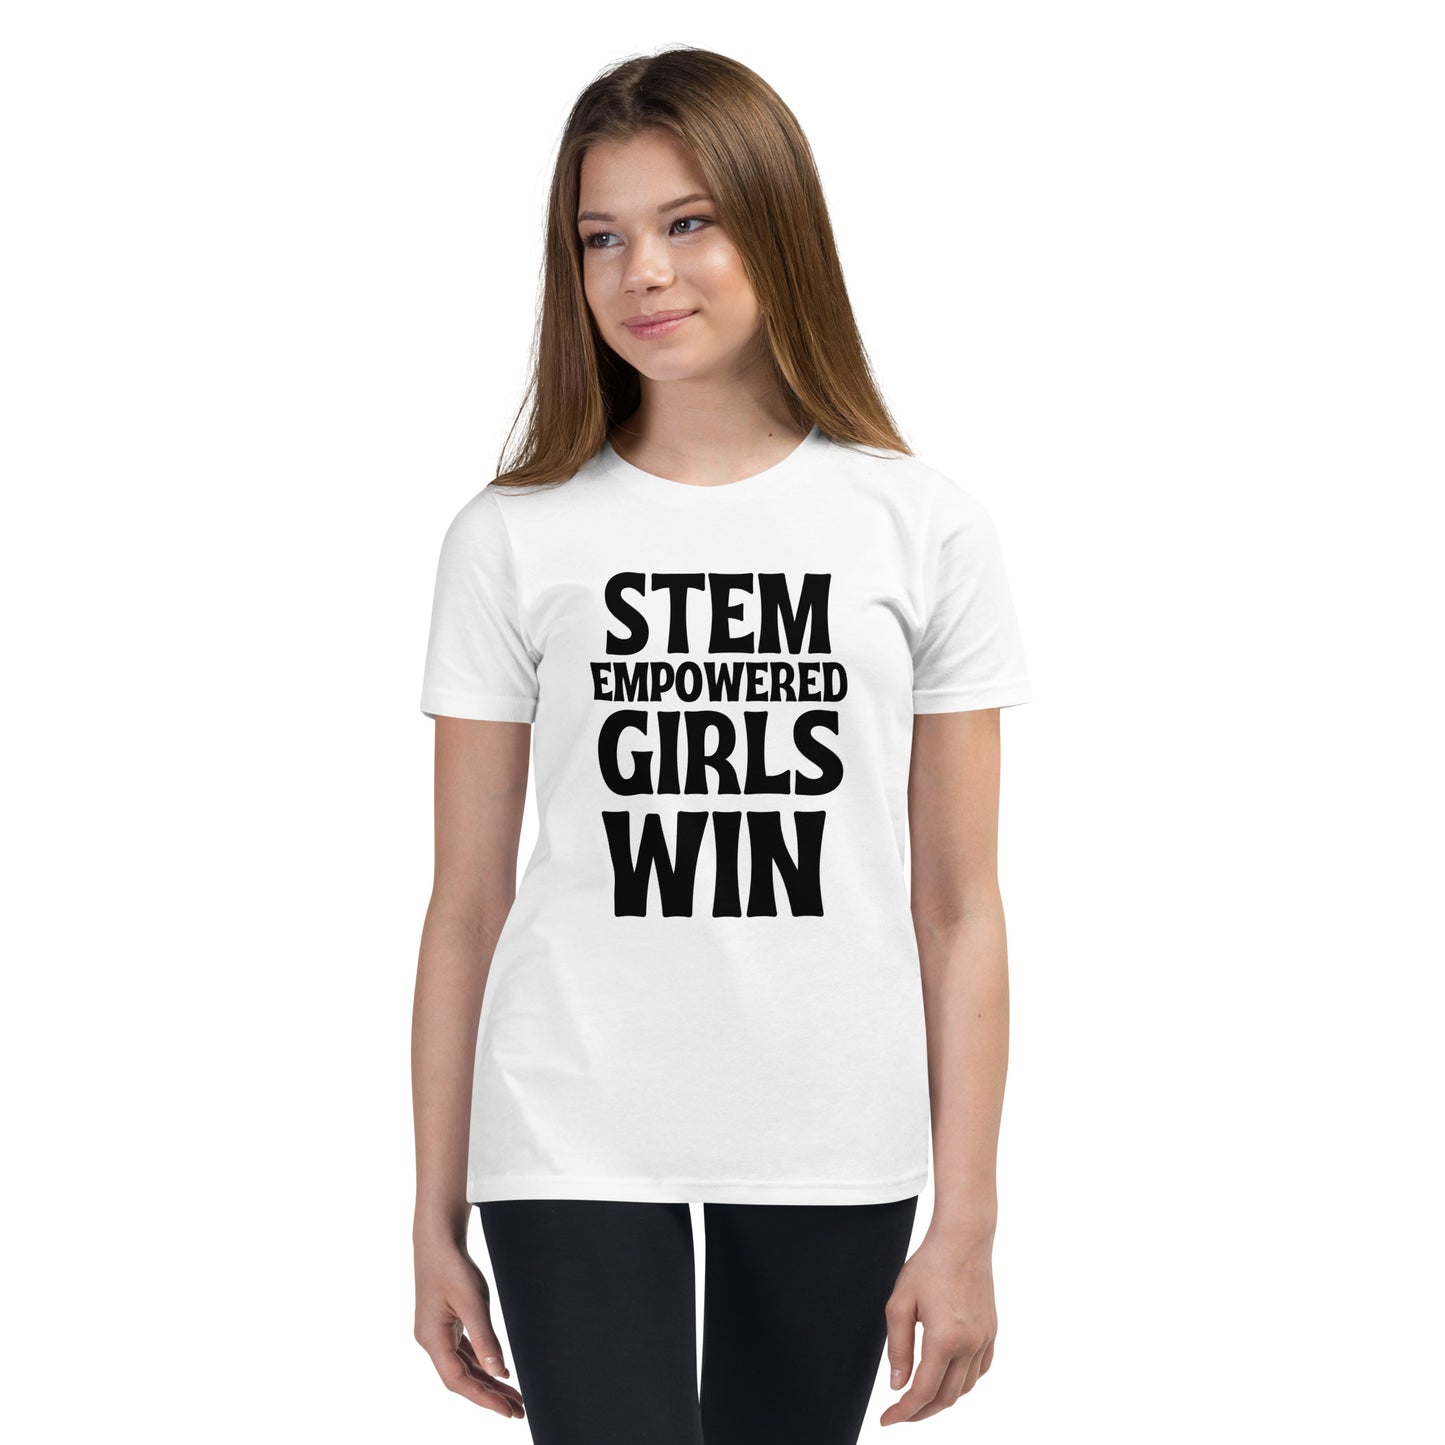 STEM Empowered Girls Win Short Sleeve Youth (White/Black) T-Shirt